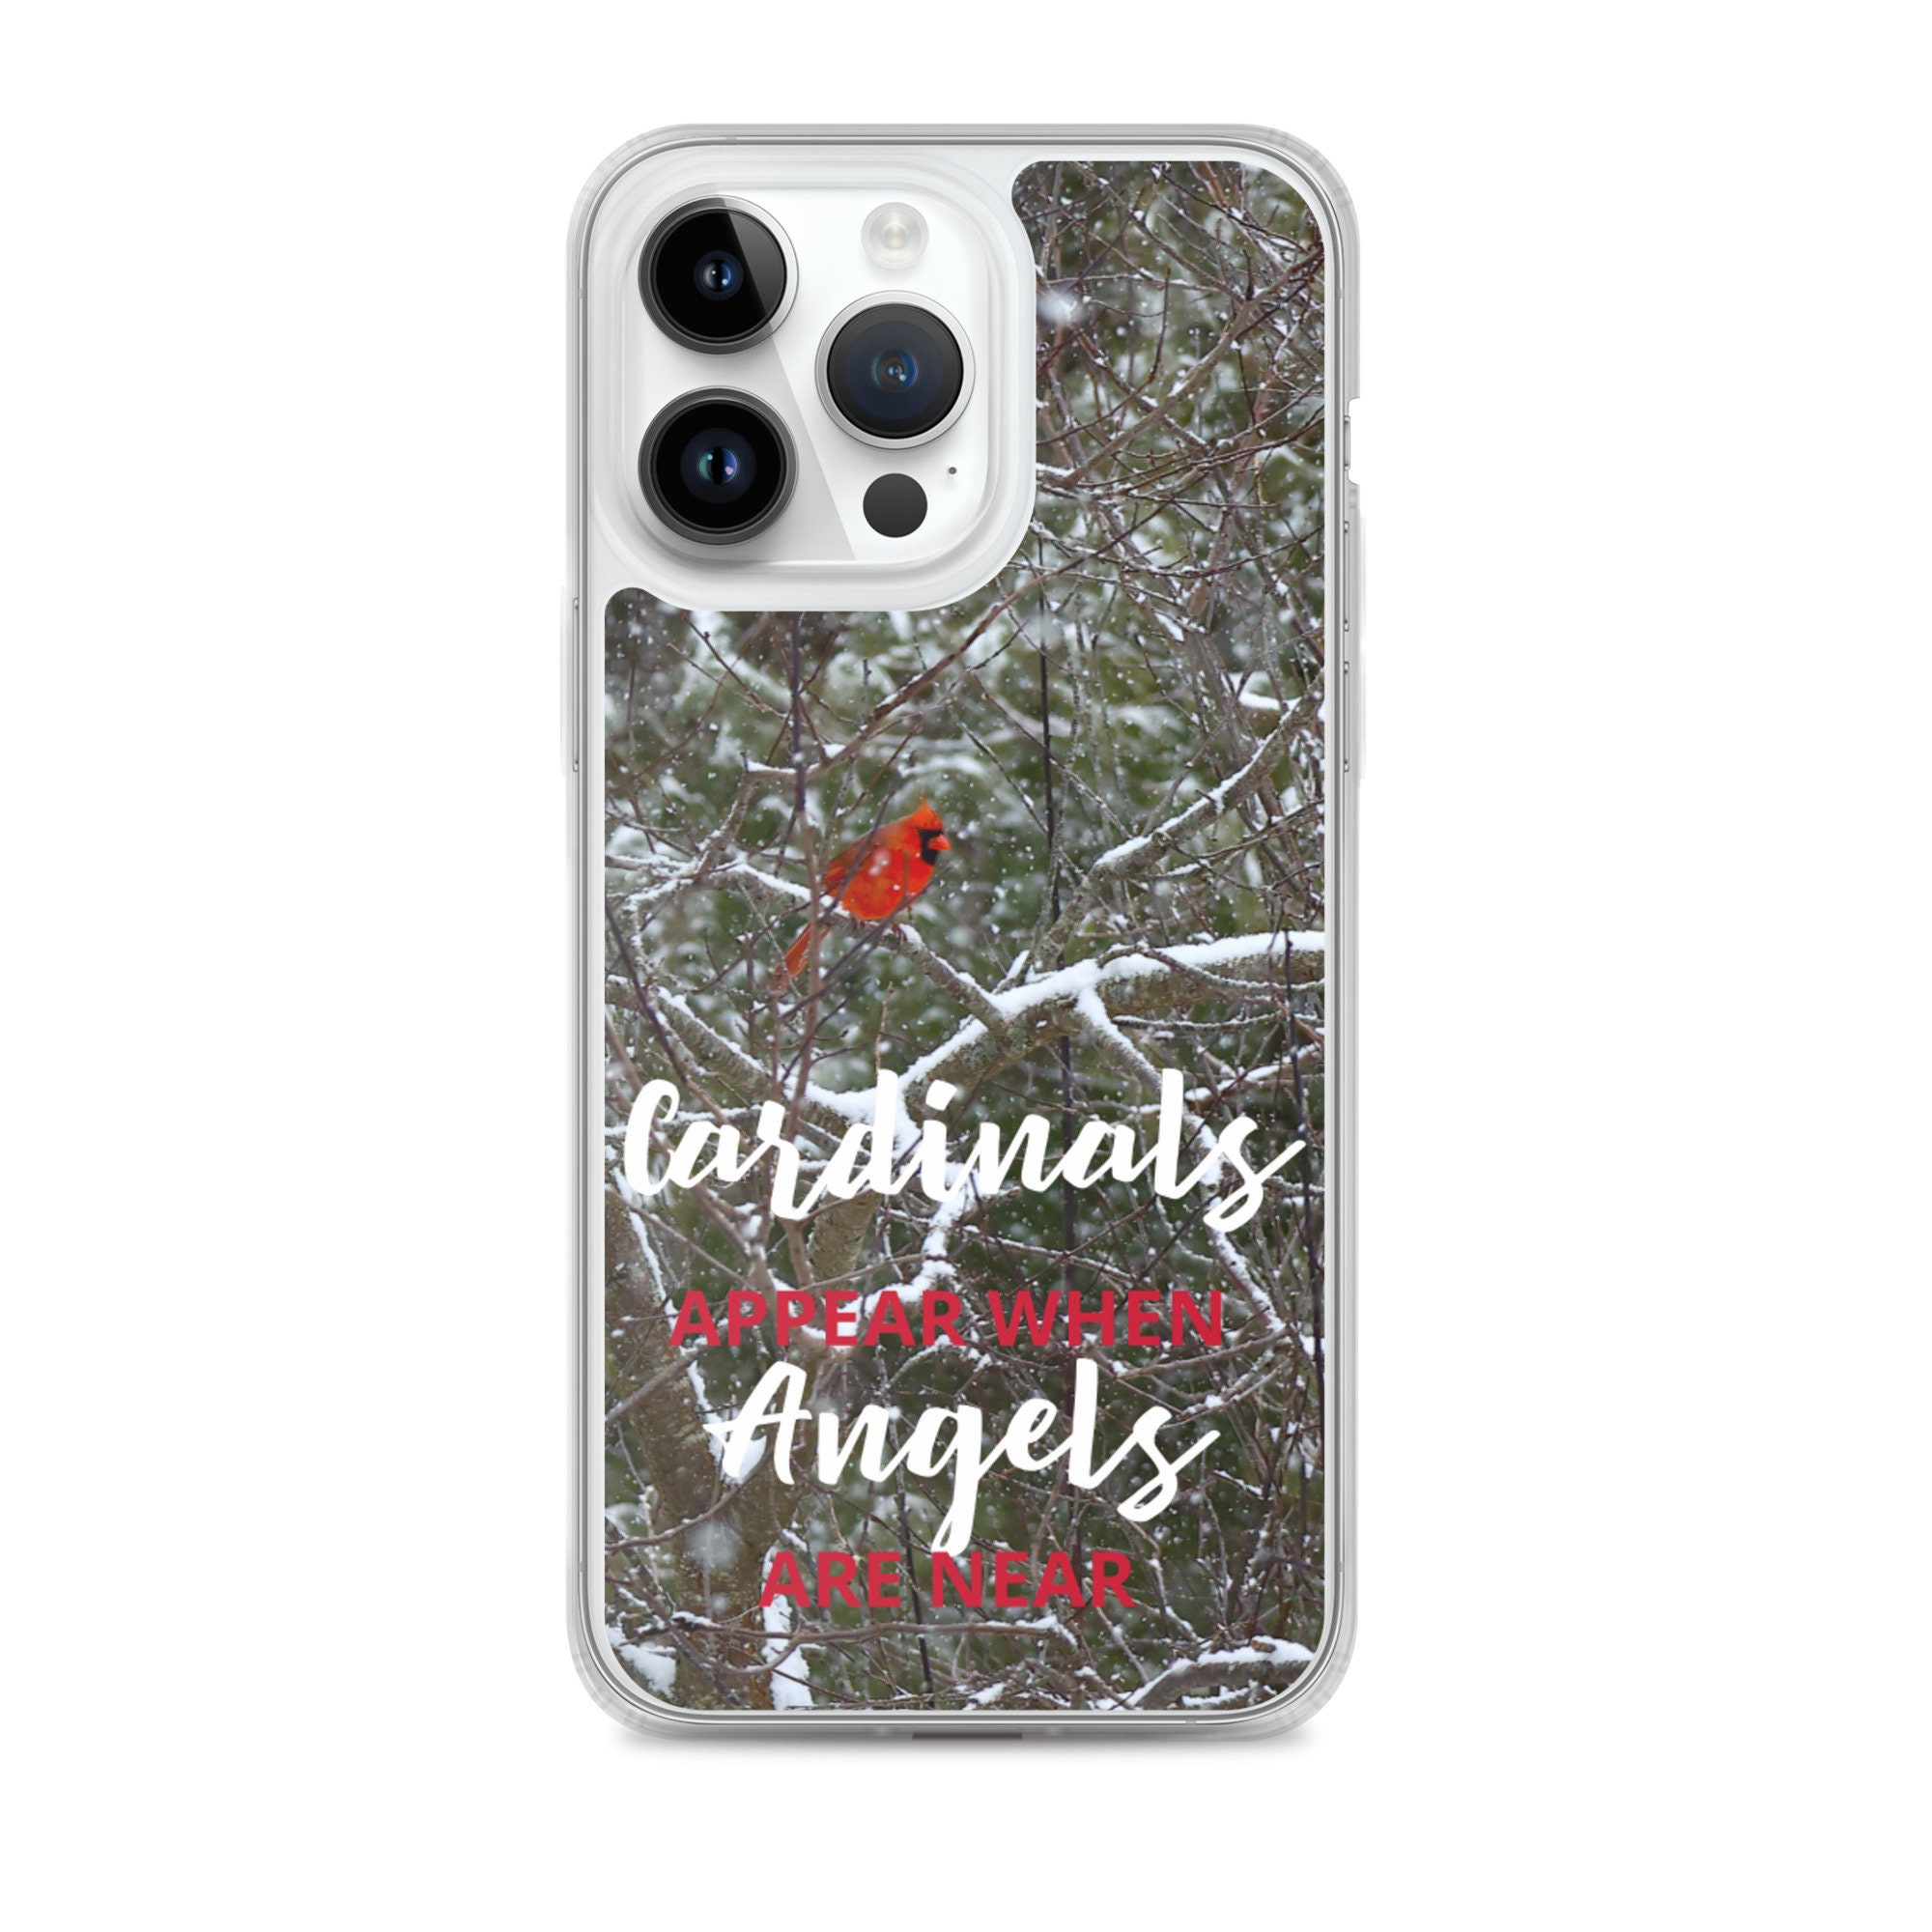 louisville cardinals iphone 14 pro case